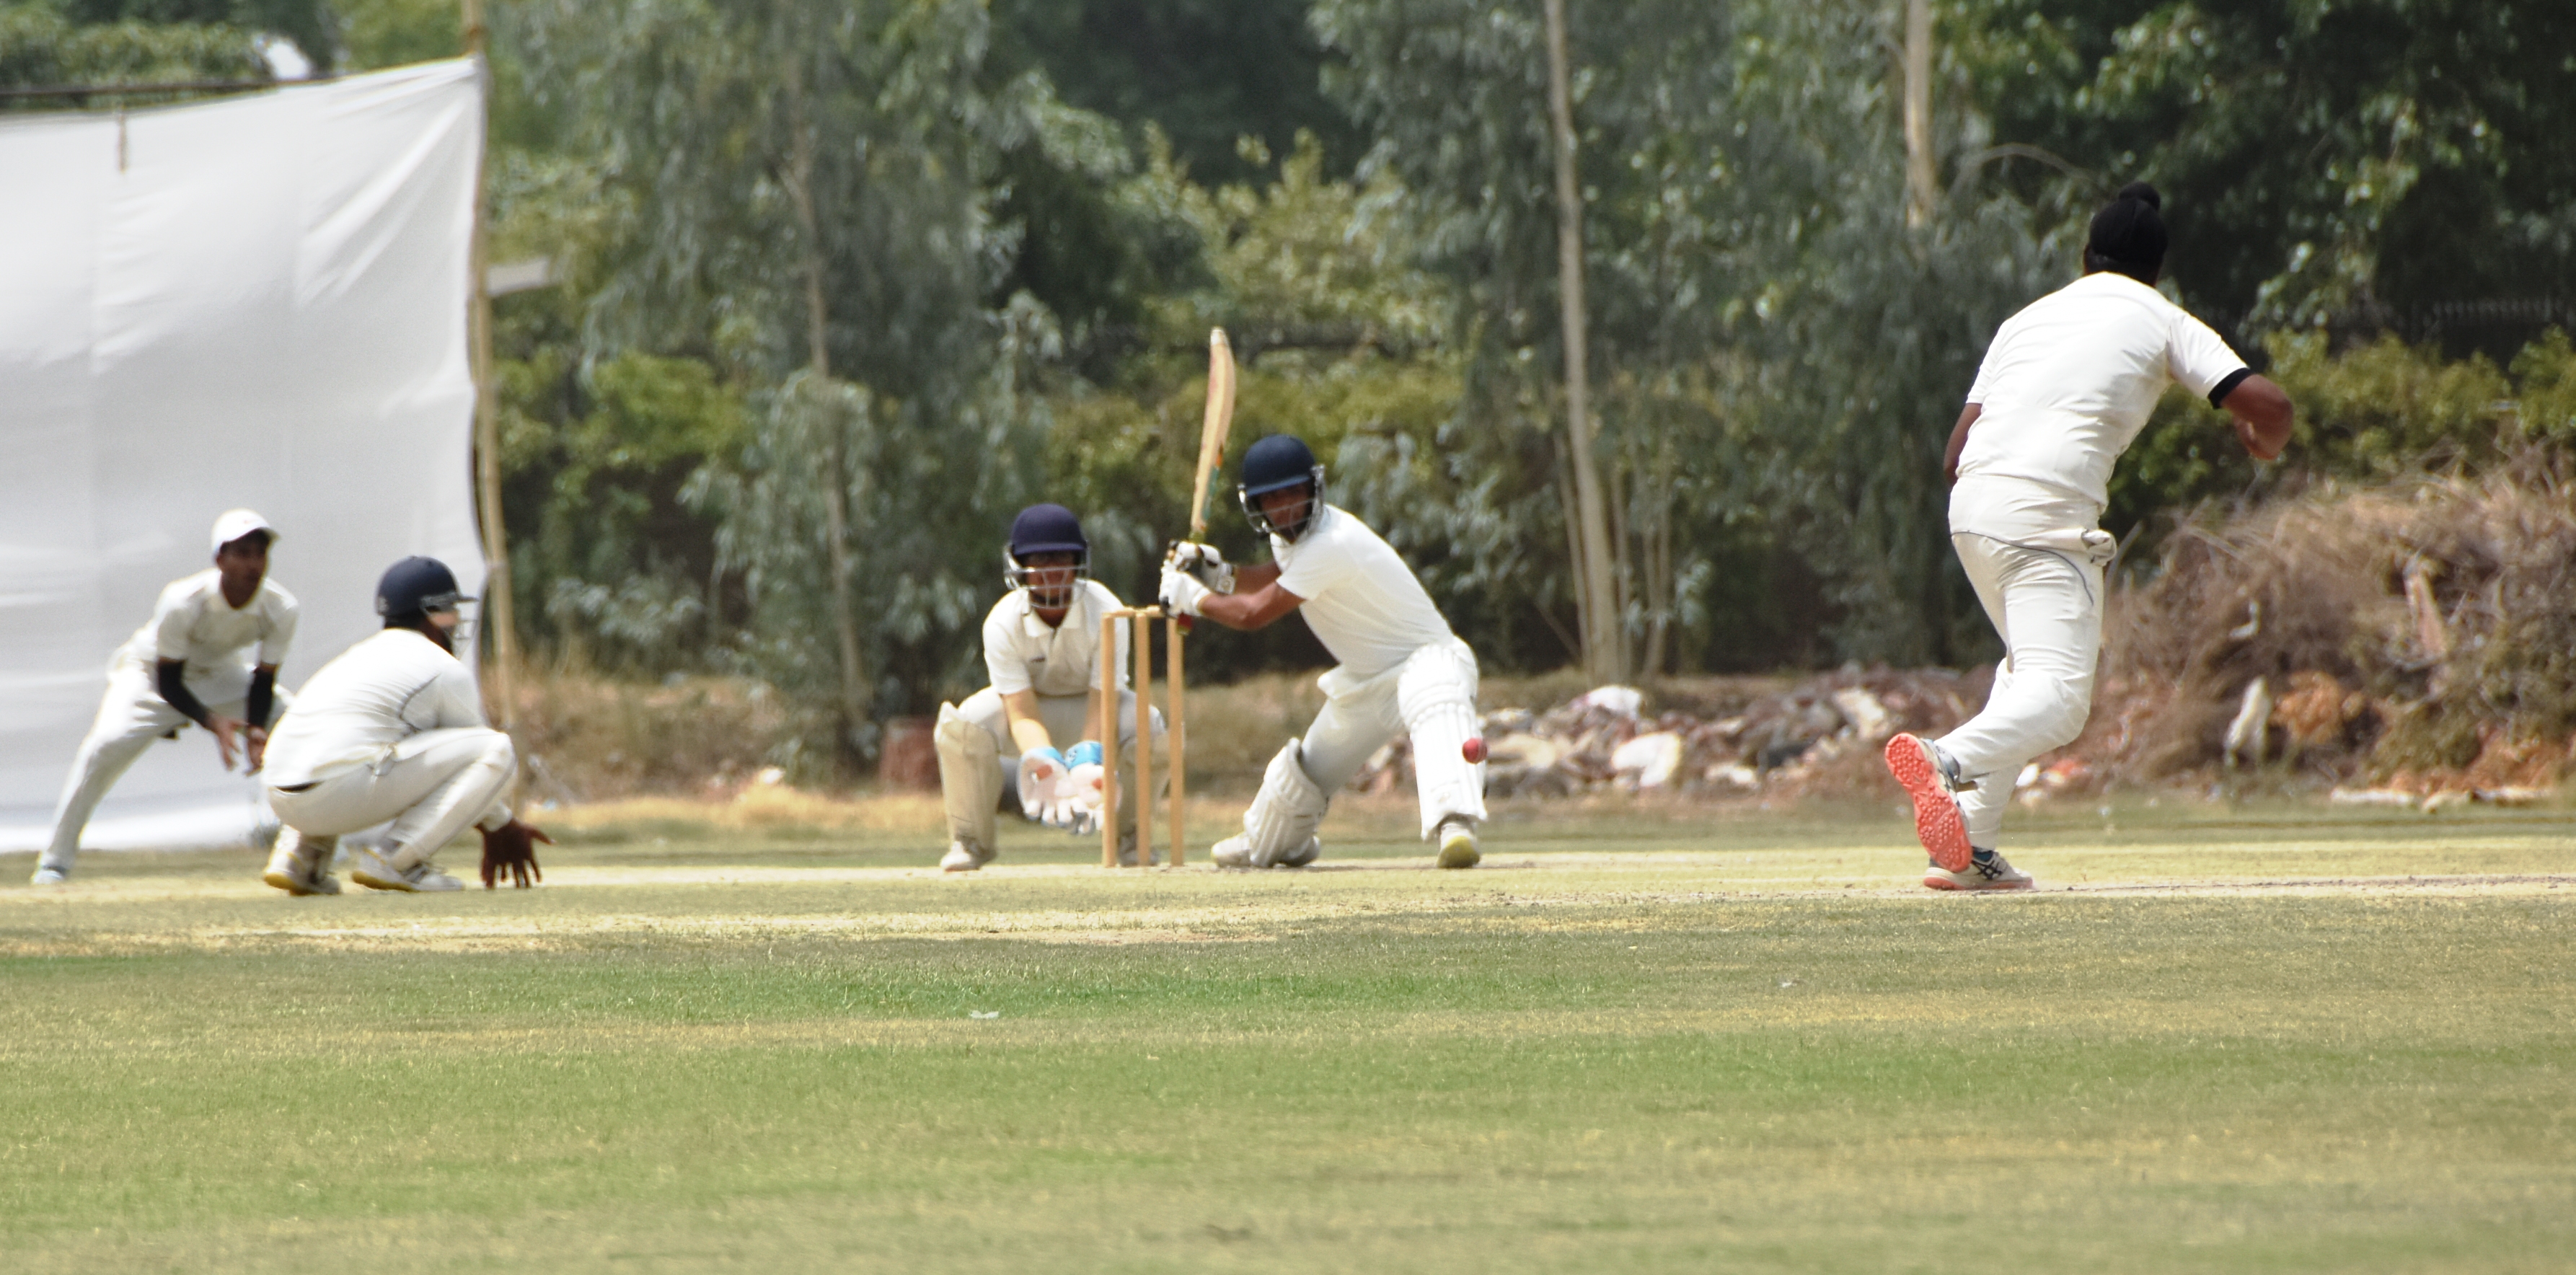 Kapurthala contain Ludhiana first innings to 141 runs